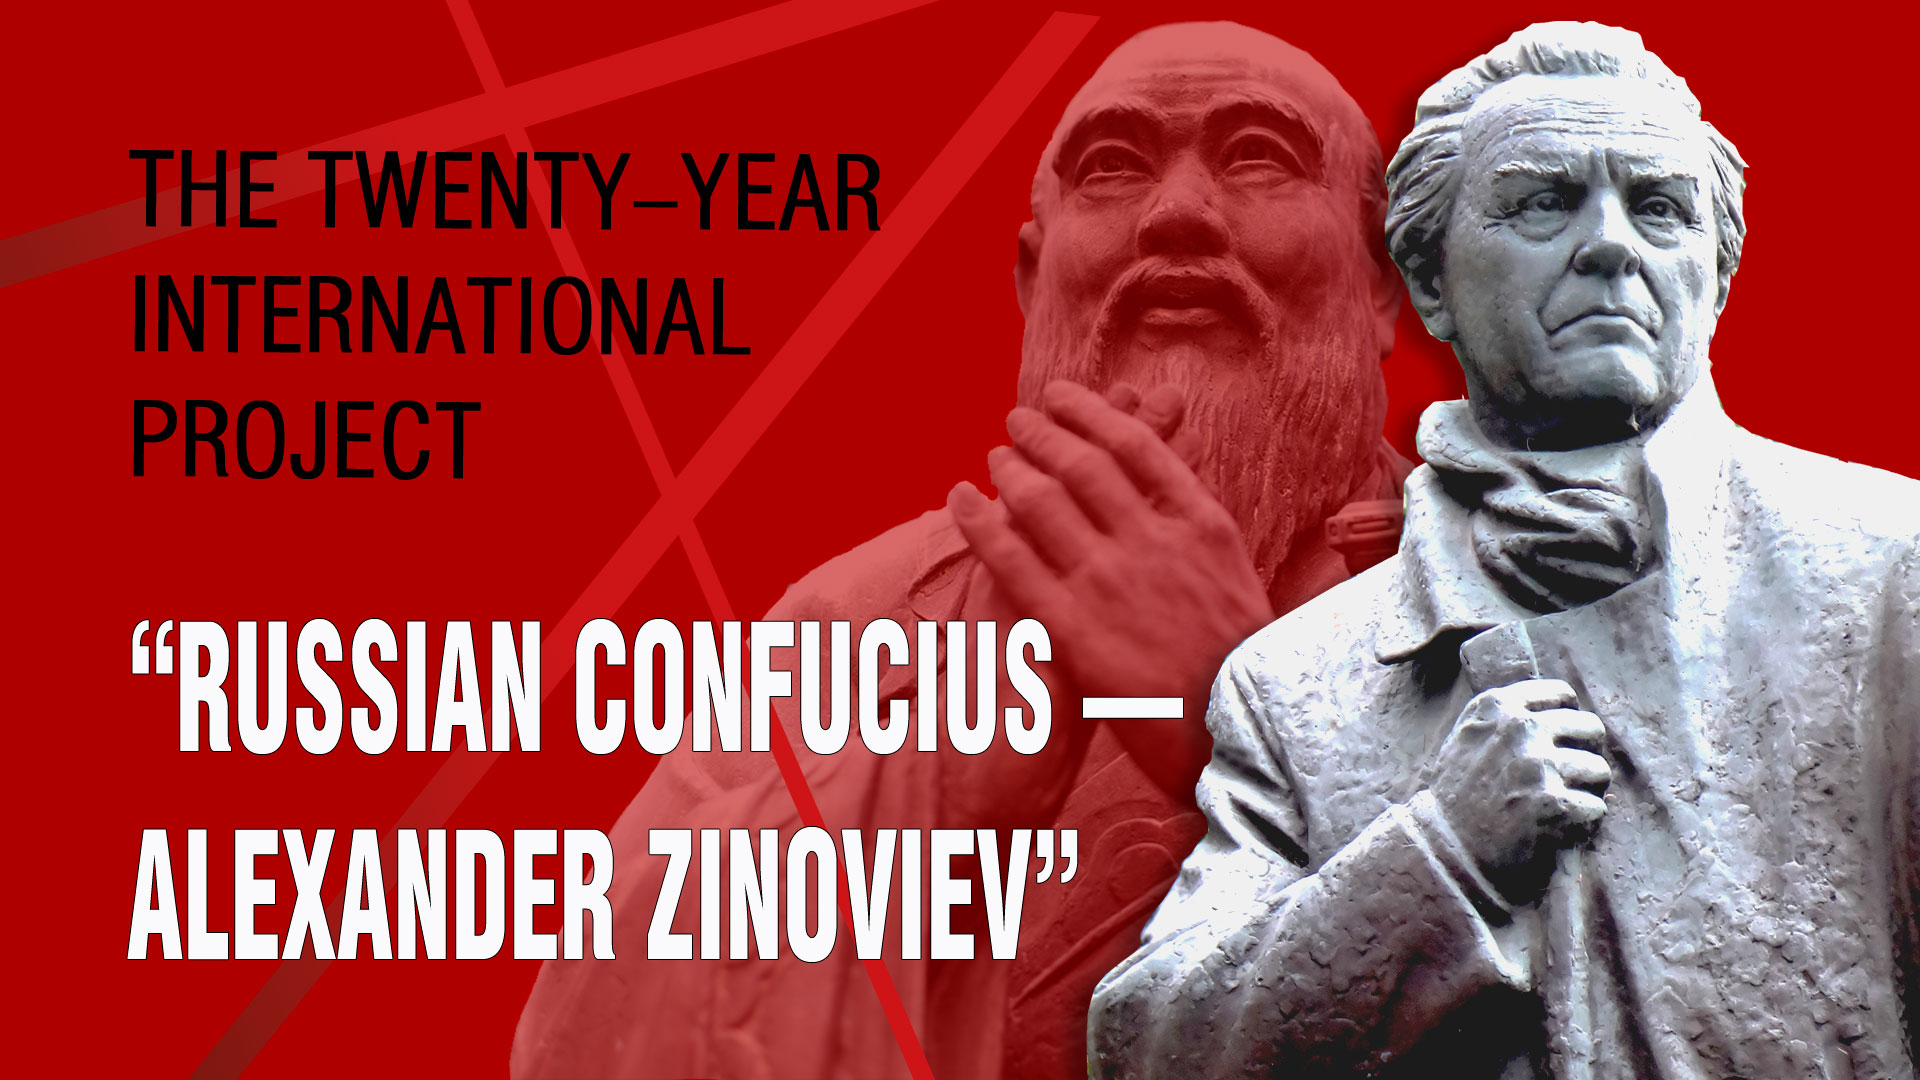 The twenty-year international project “Russian Confucius — Alexander Zinoviev”